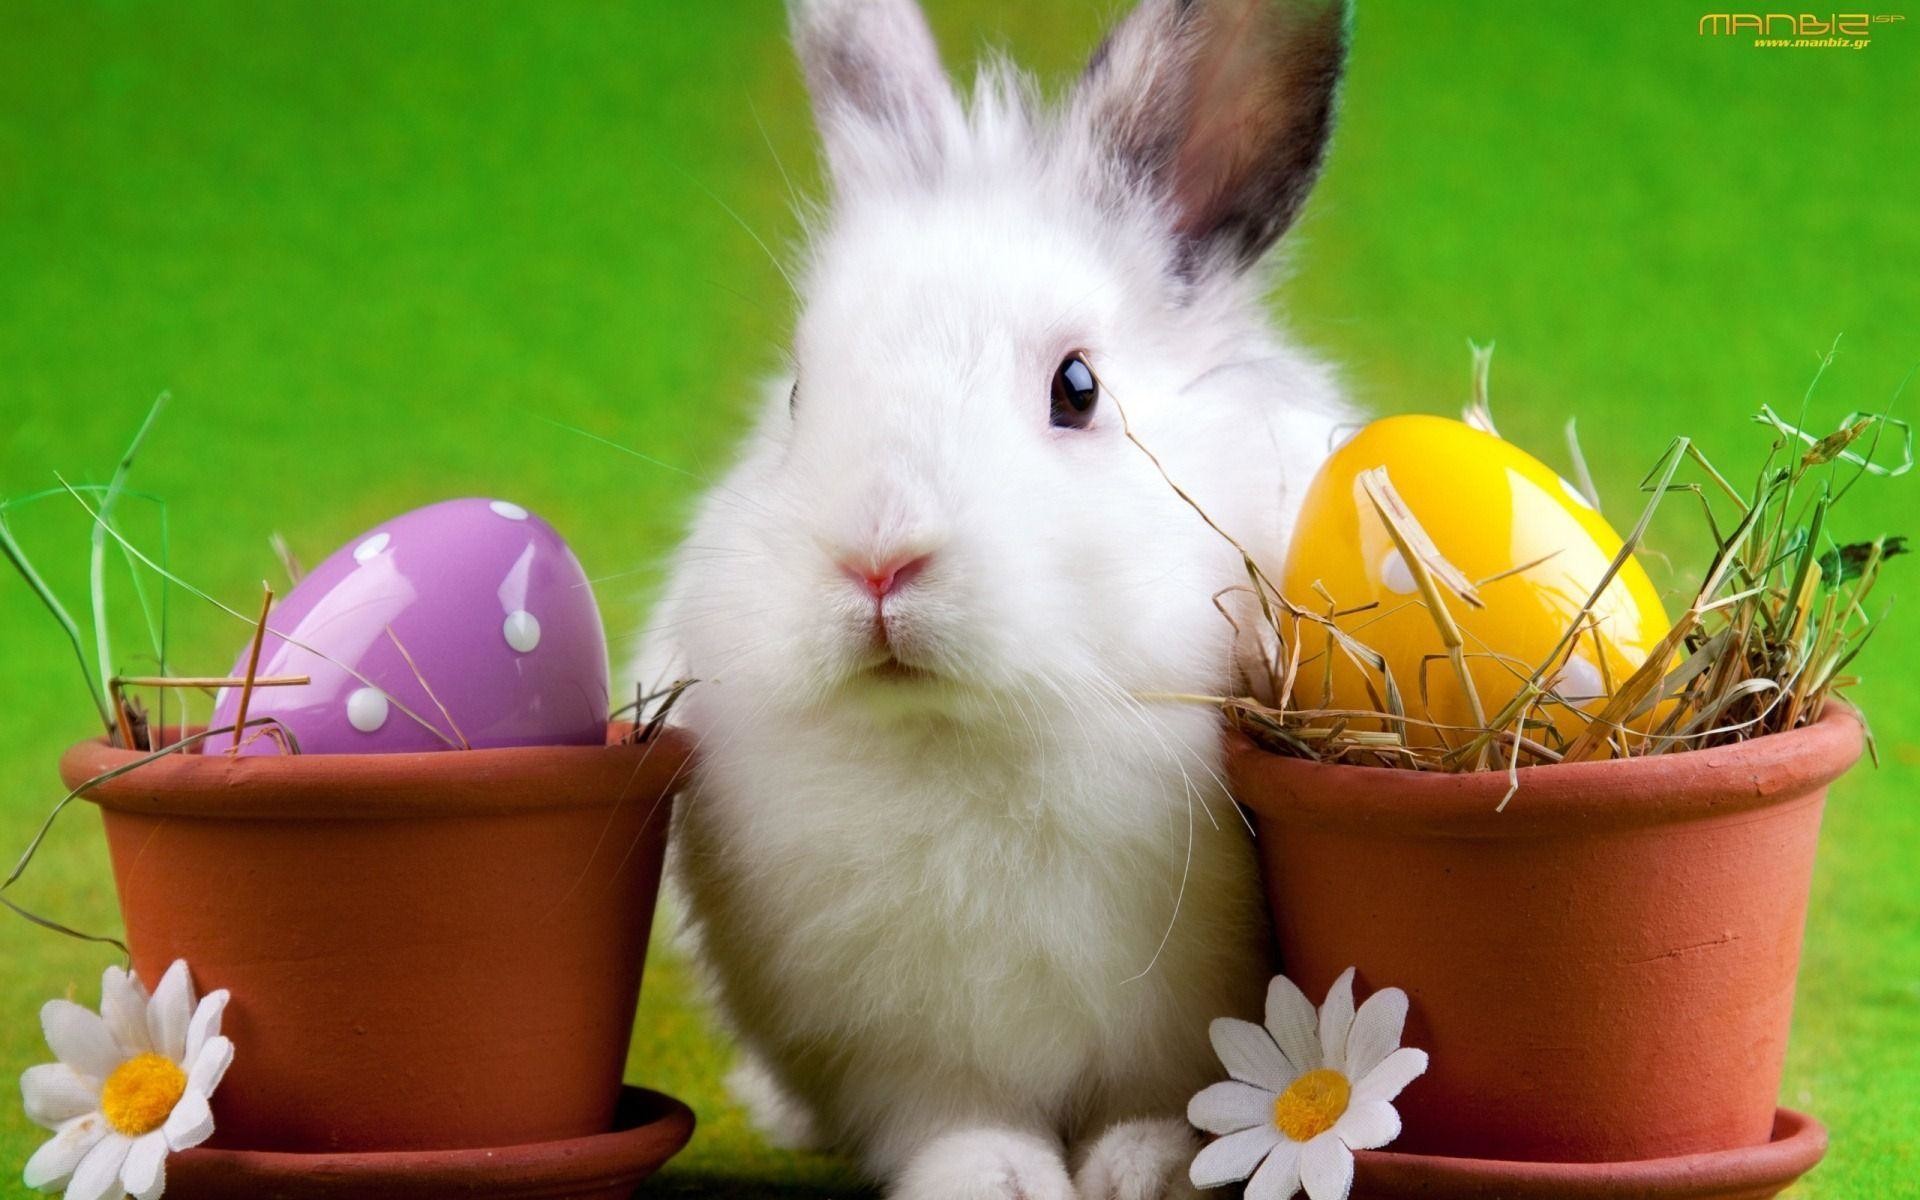 easter bunny wallpaper desktop1 Easter Bunny Wallpaper Desktop .